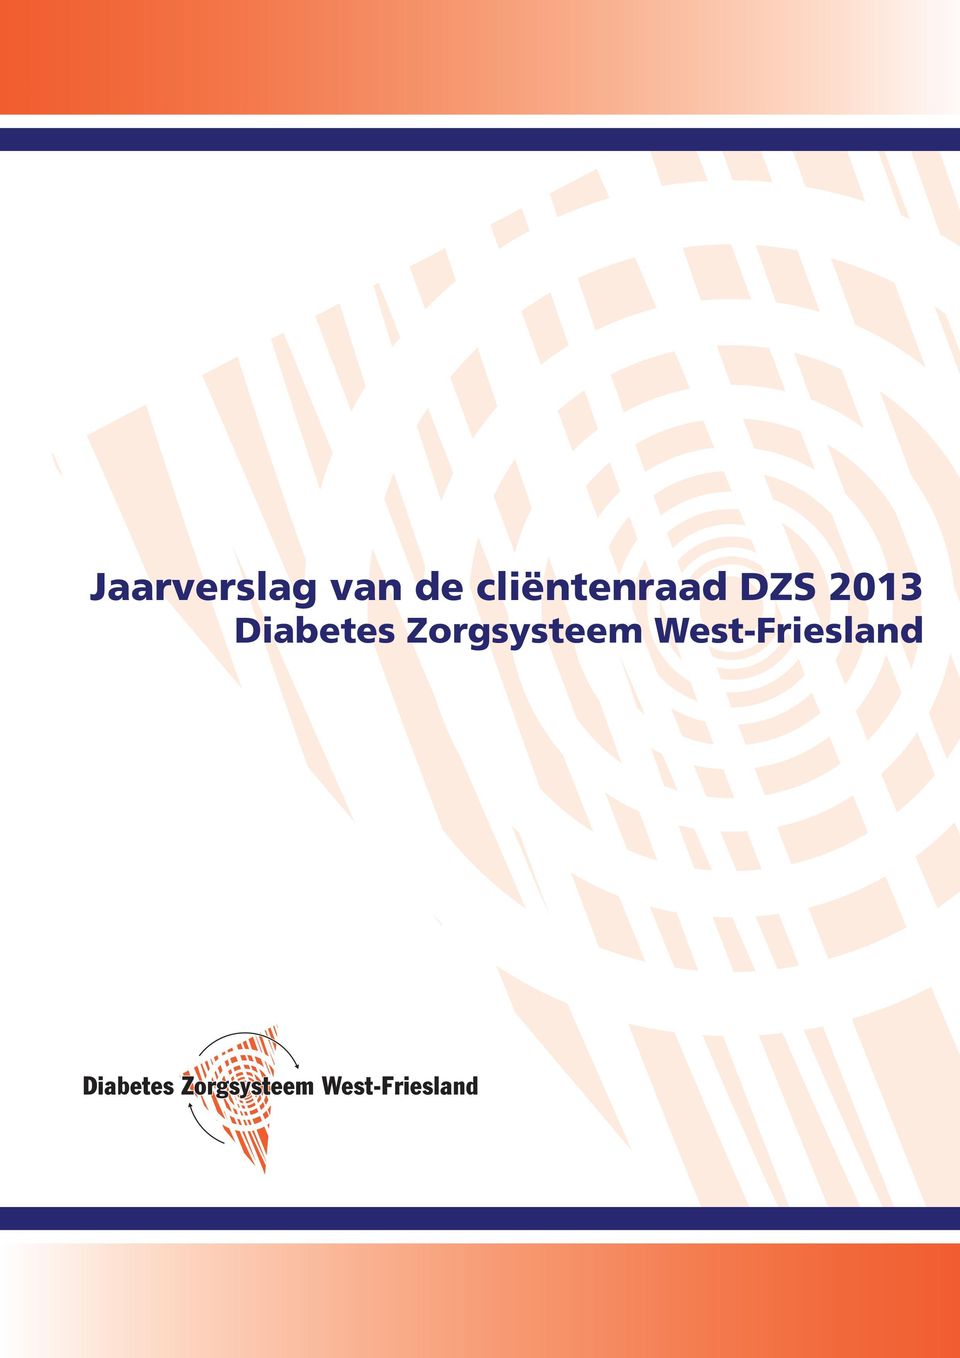 2013 Diabetes